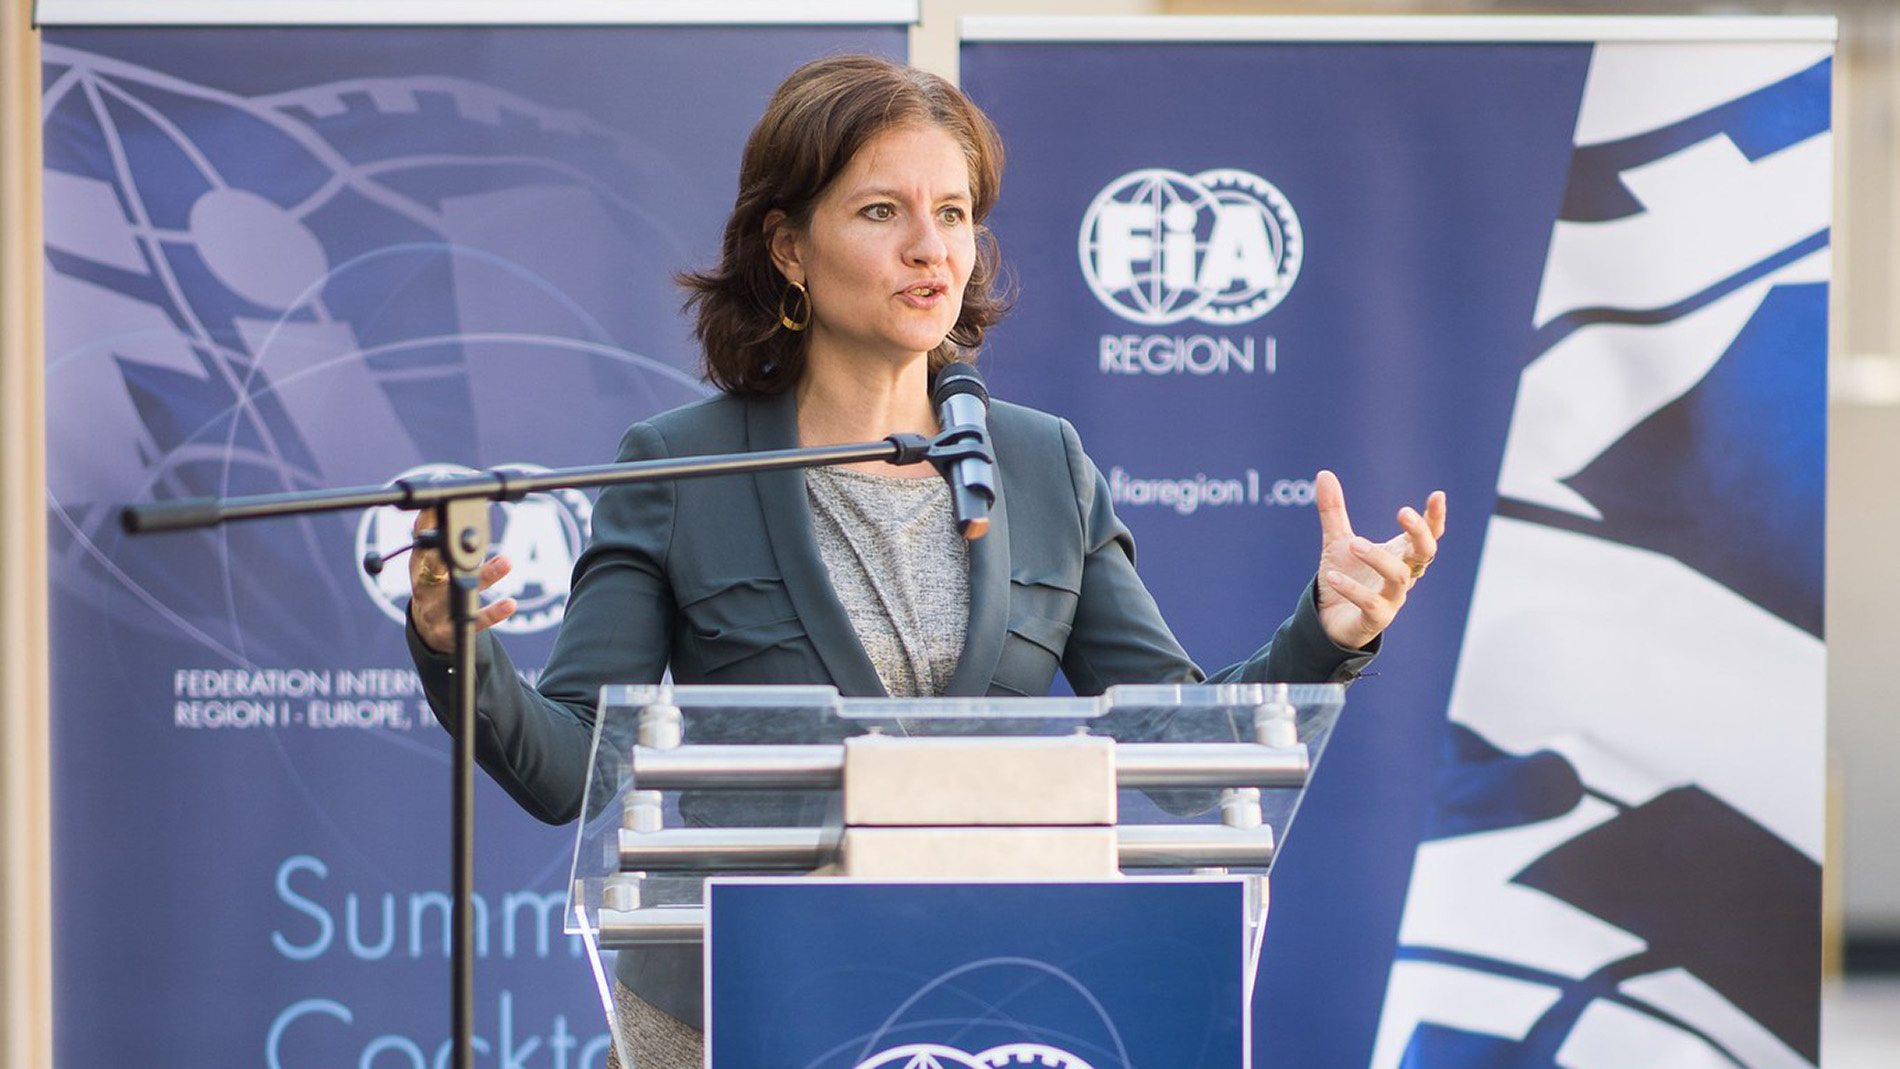 Laurianne Krid, Director General at Fédération Internationale de l'Automobile (FIA) Region I